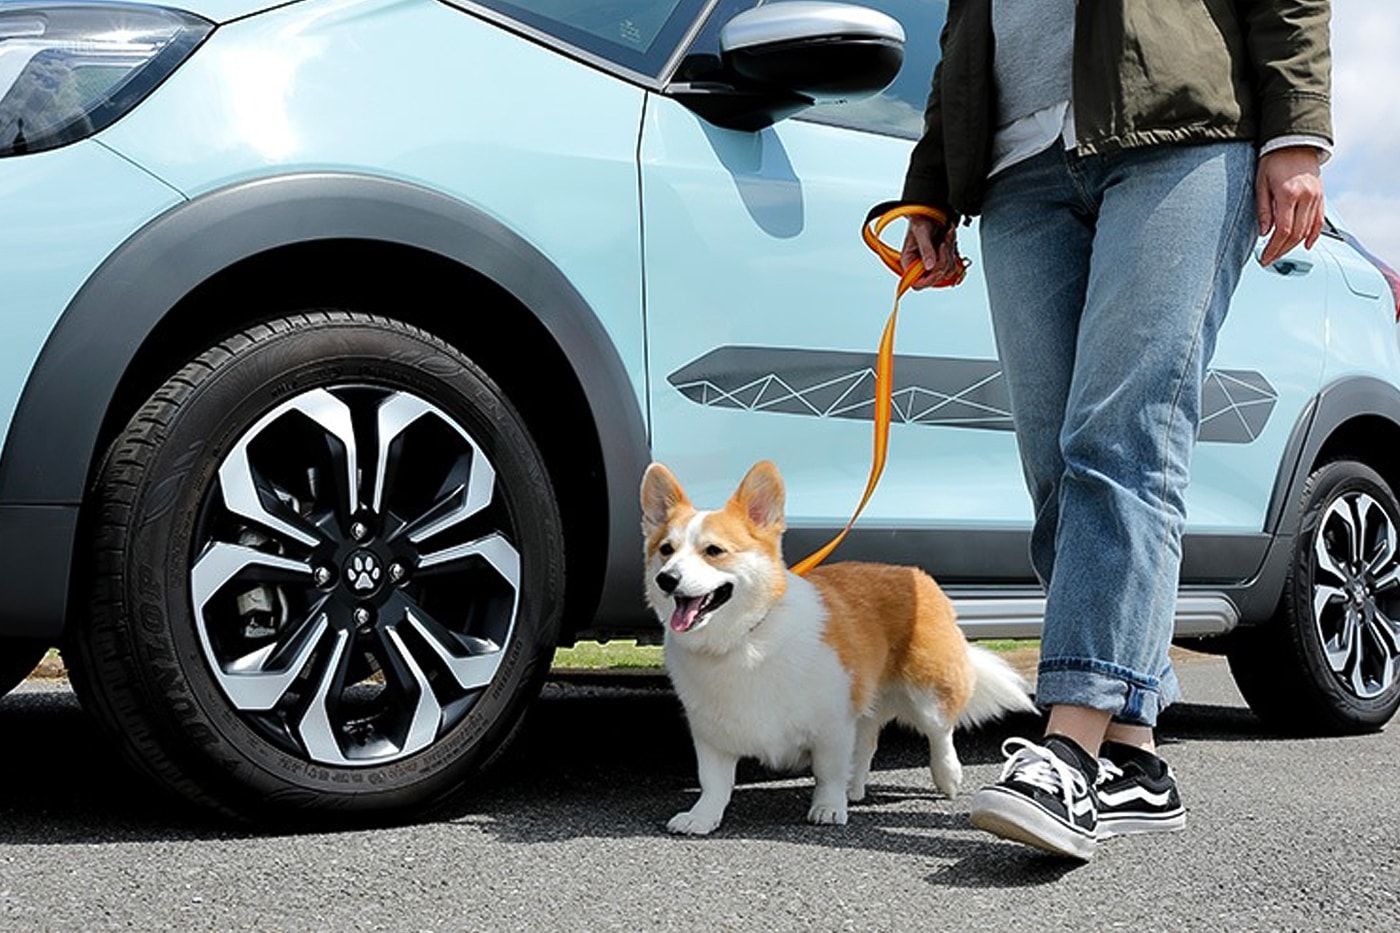 Honda Japan Shiba Inu Corgi Car Accessories News Pets Dogs Corgi Shiba Inu Japan Fit N-Box N-Wgn Accord Oddesey